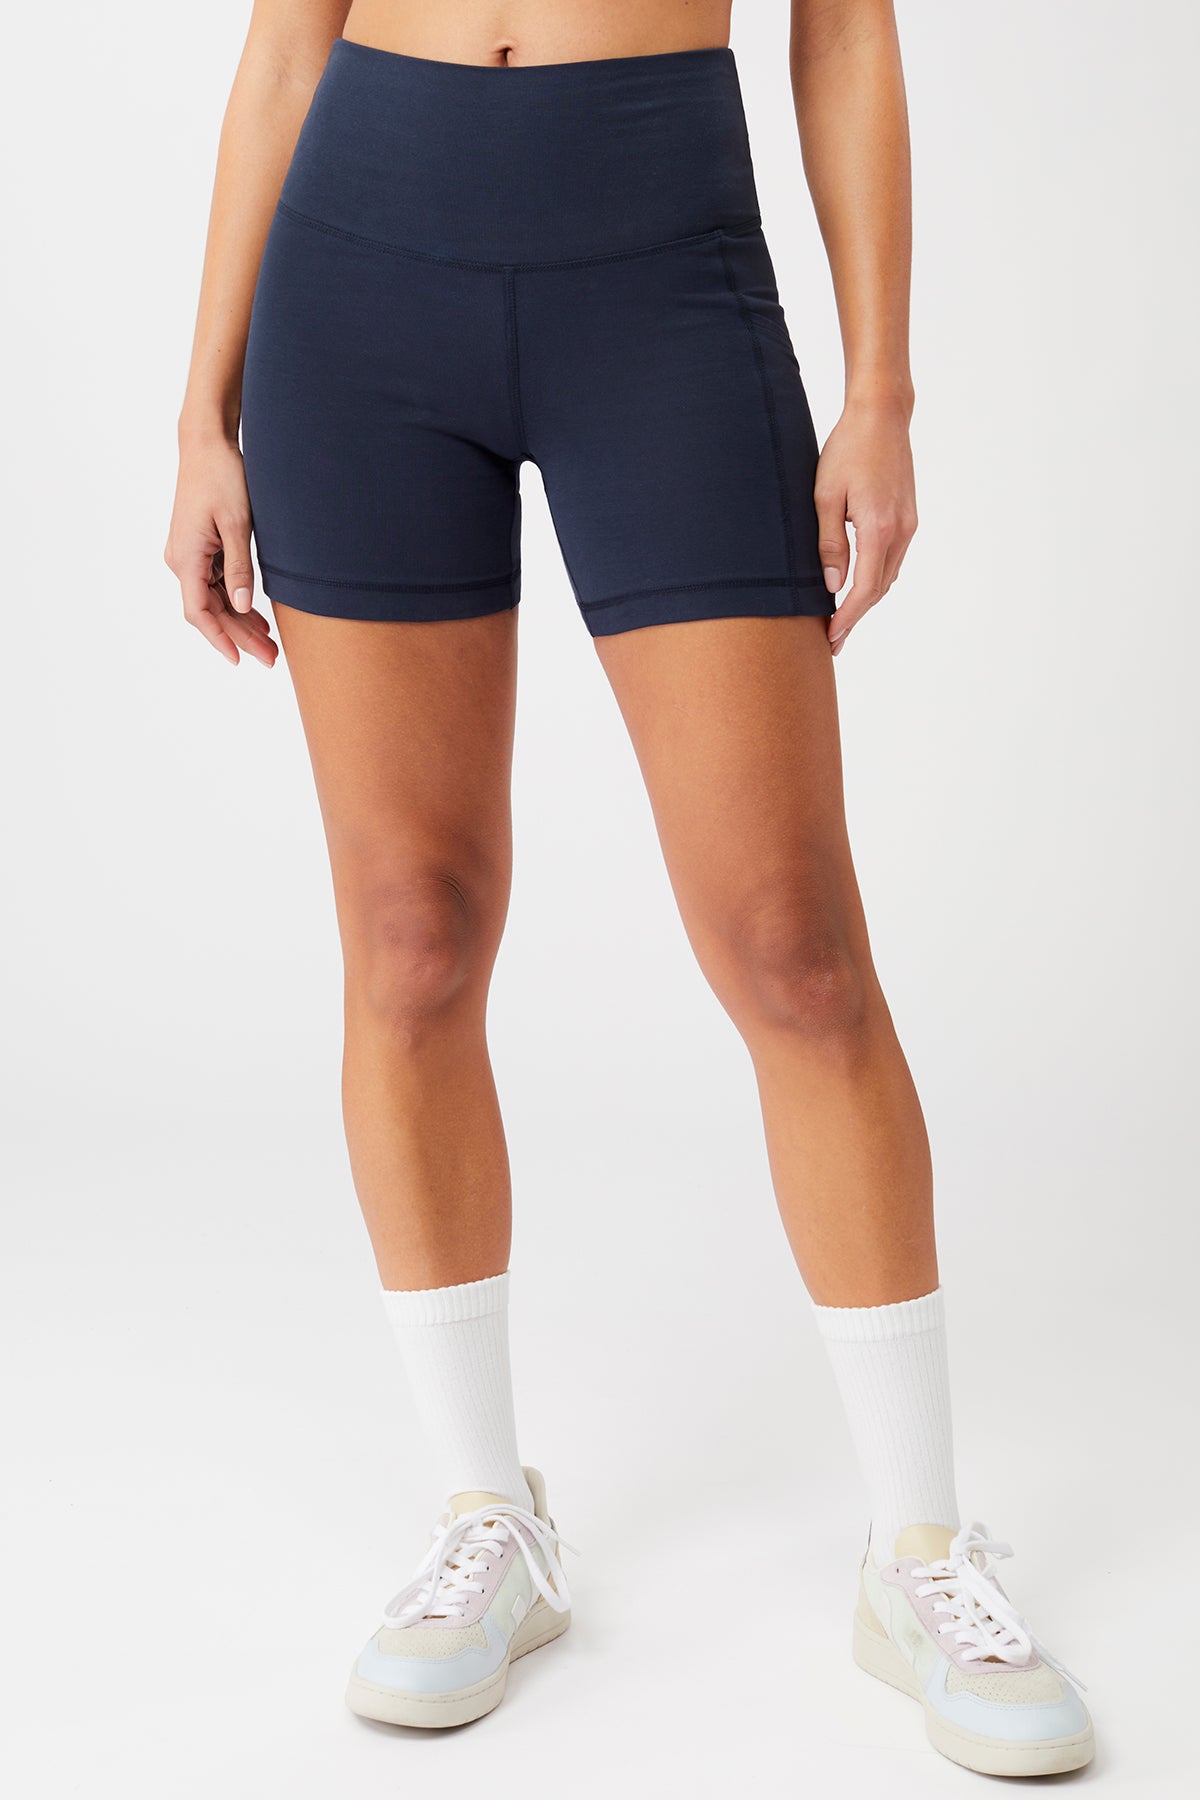 Mandala Sprinter Shorts for women in the color Saphir